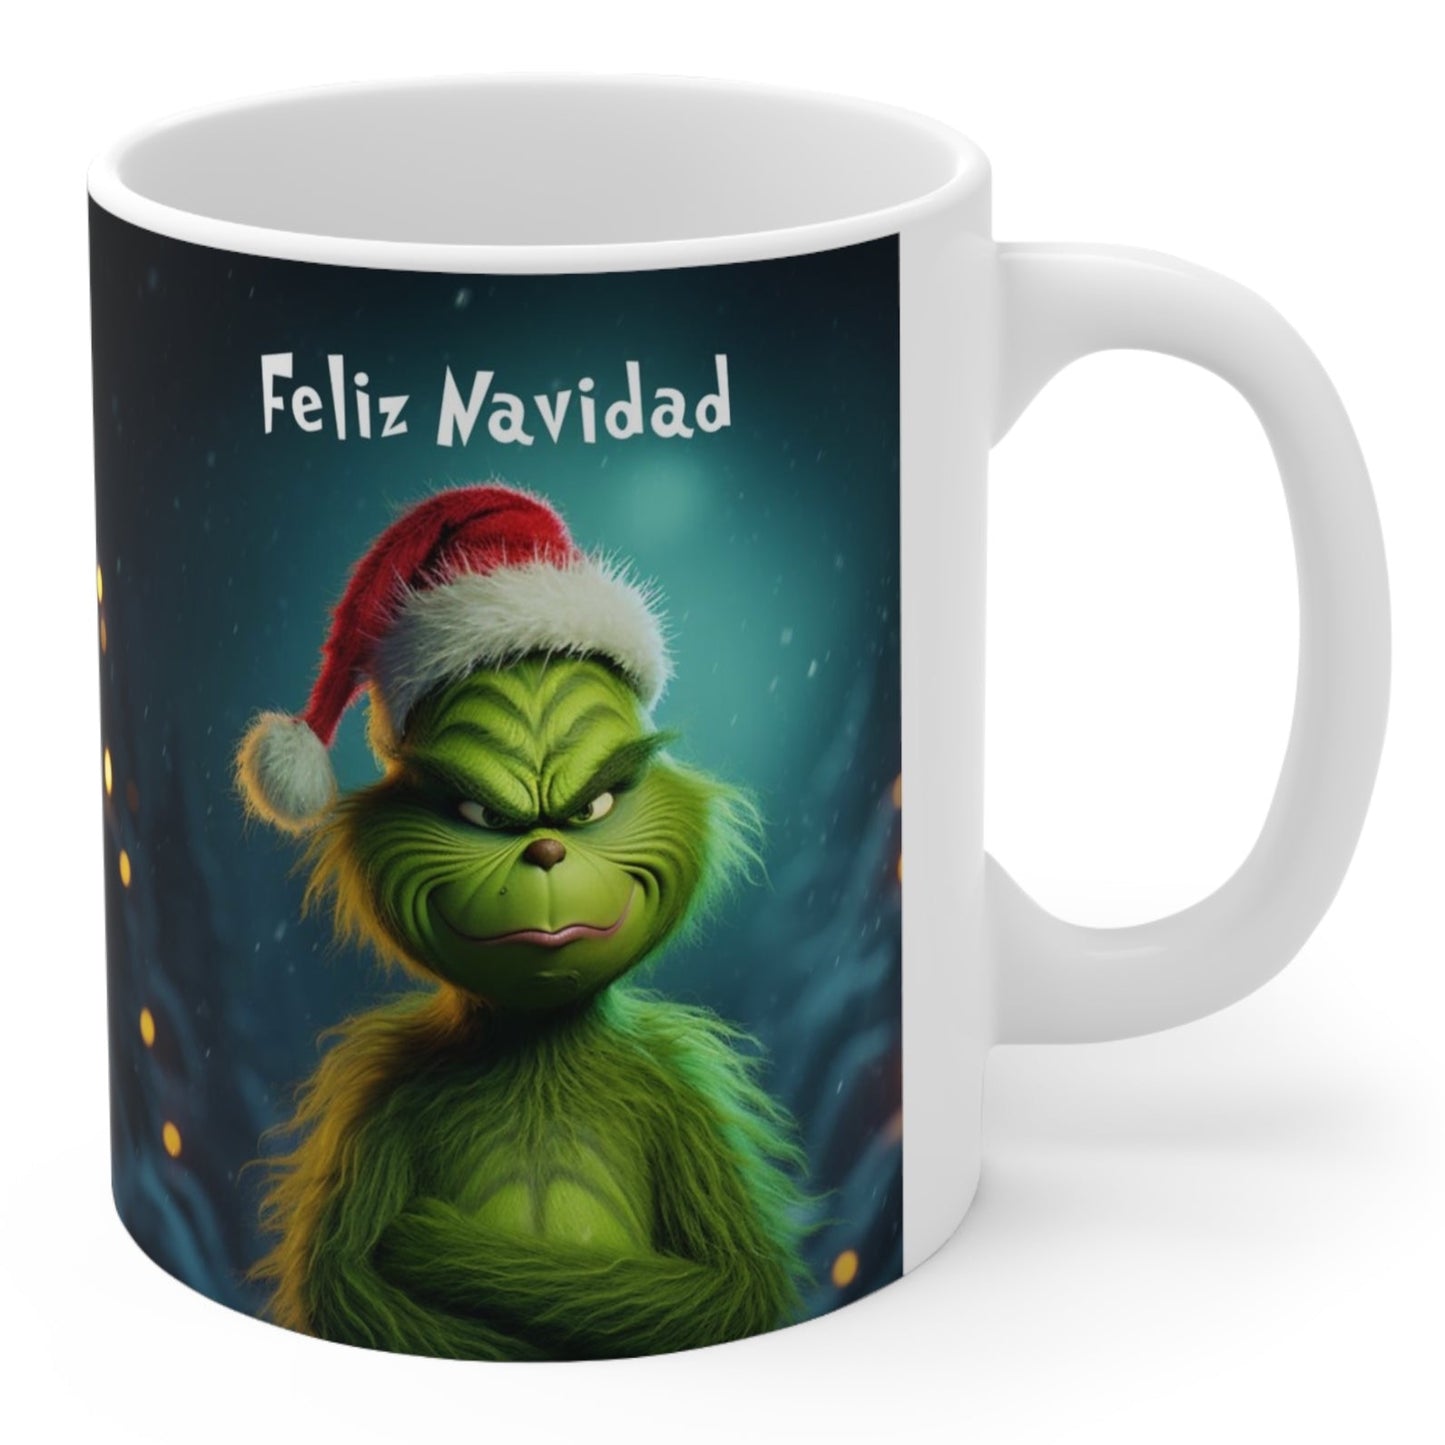 The Grinch Feliz Navidad Ceramic Coffee Mug Grinch Christmas Coffee Mugs